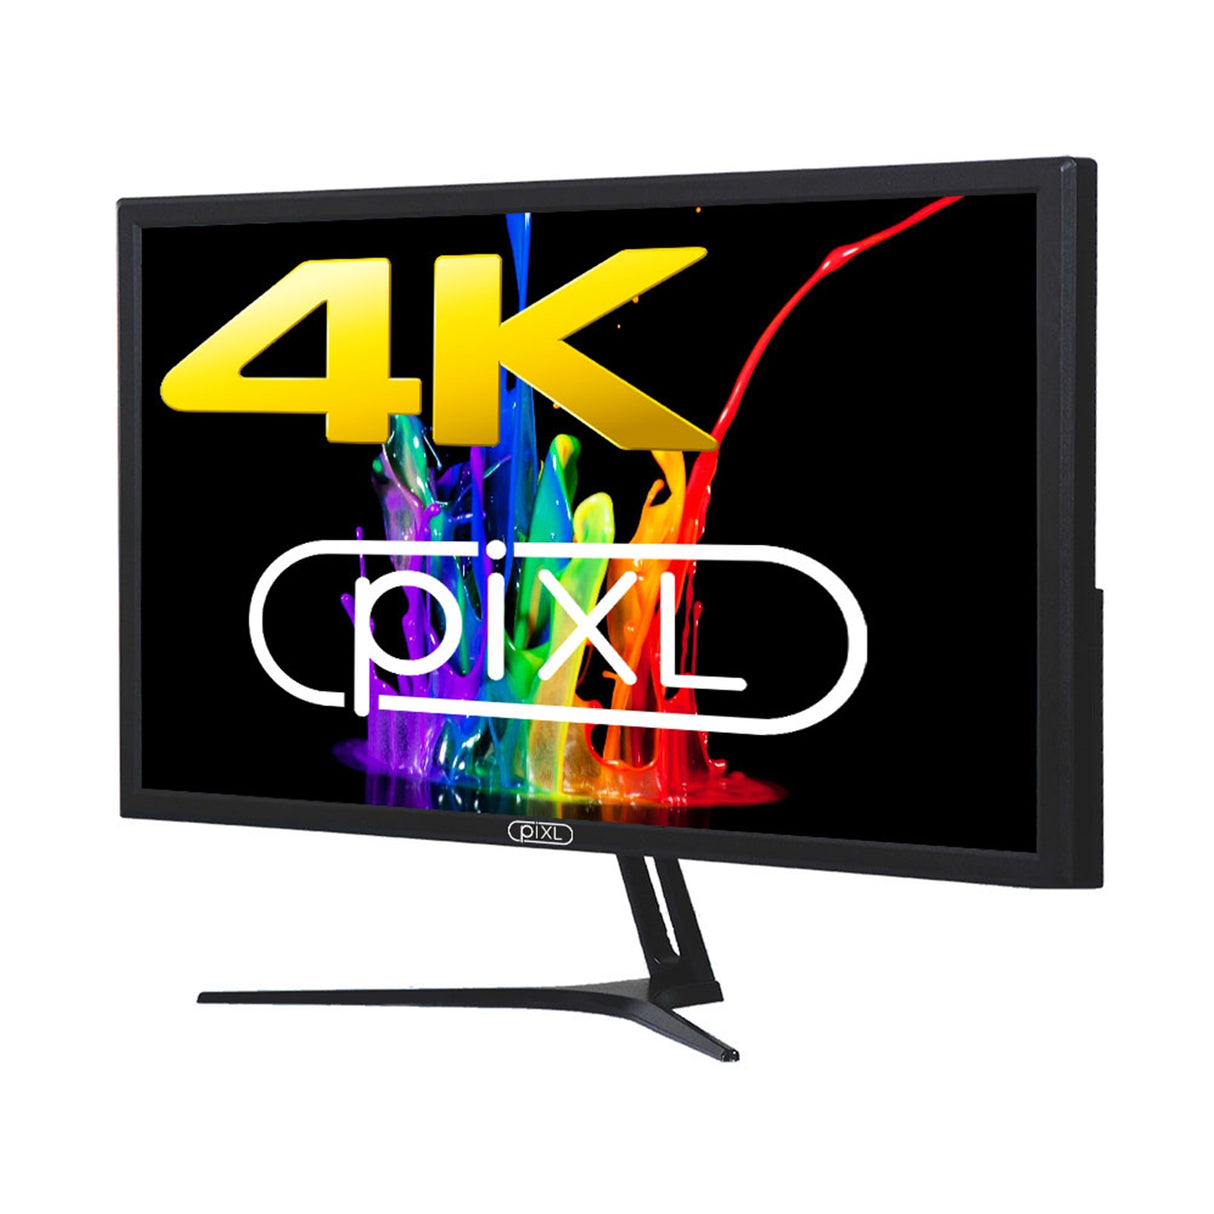 piXL CM28GU1 28 Inch UHD Monitor, 4K, LED Widescreen, 2160p, 5ms Response Time, 60Hz Refresh, HDMI / Display Port, 16.7 Million Colour Support, VESA Mount, Black Finish